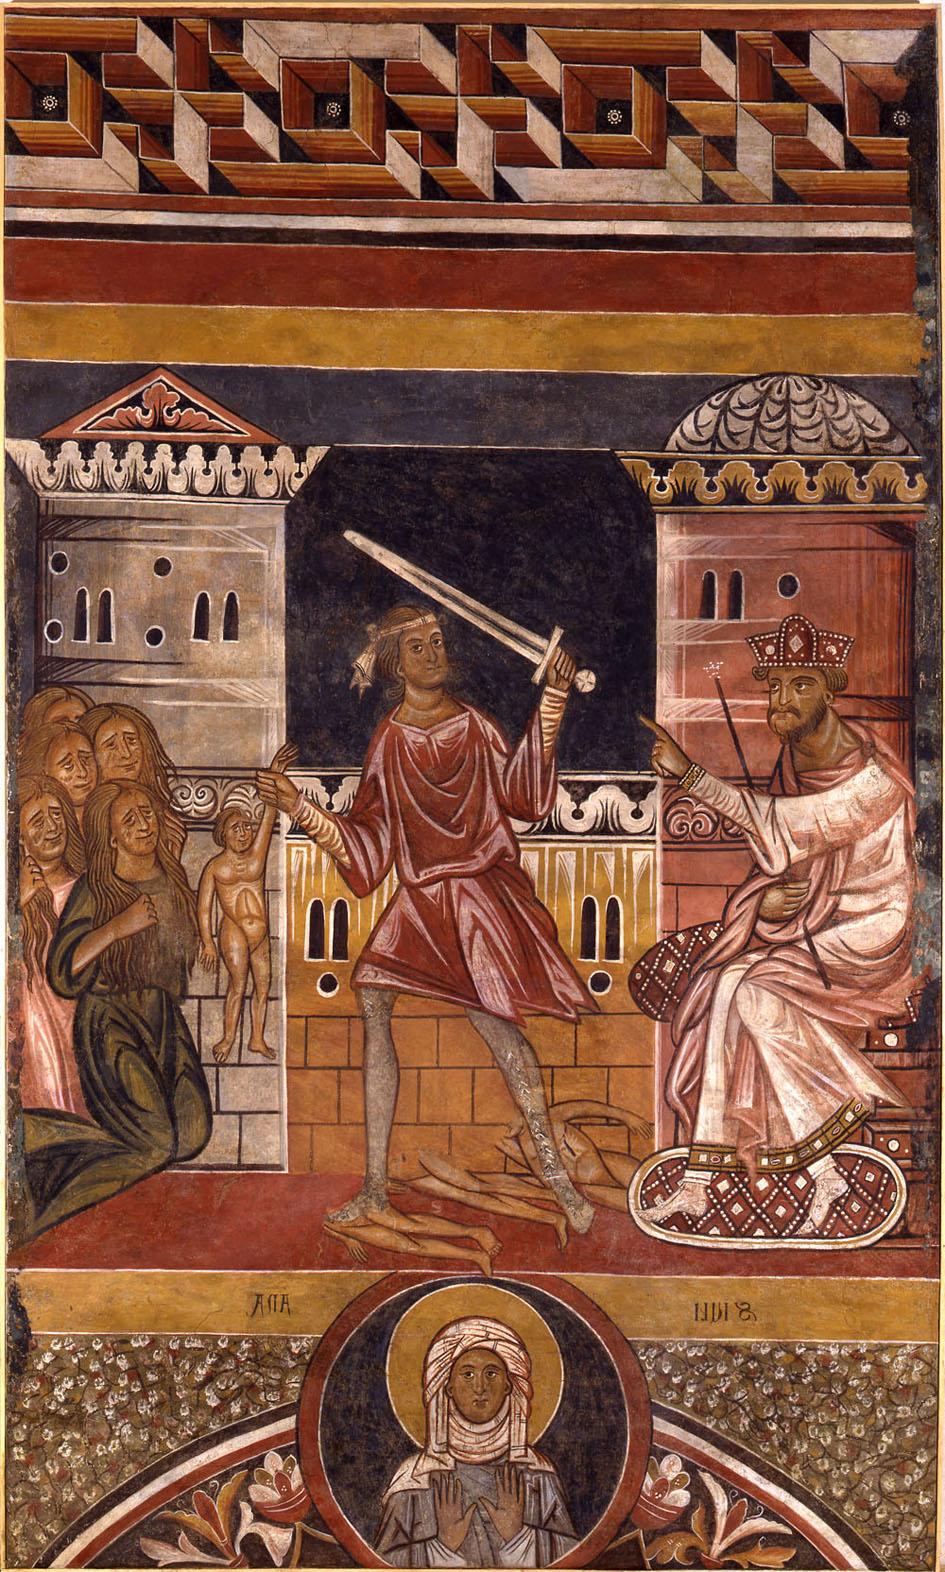 Berlinghiero da Lucca, "Massacre of the Innocents", detached fresco on a support of alveolar resin, cm 350x205, Bologna, Basilica di Santo Stefano